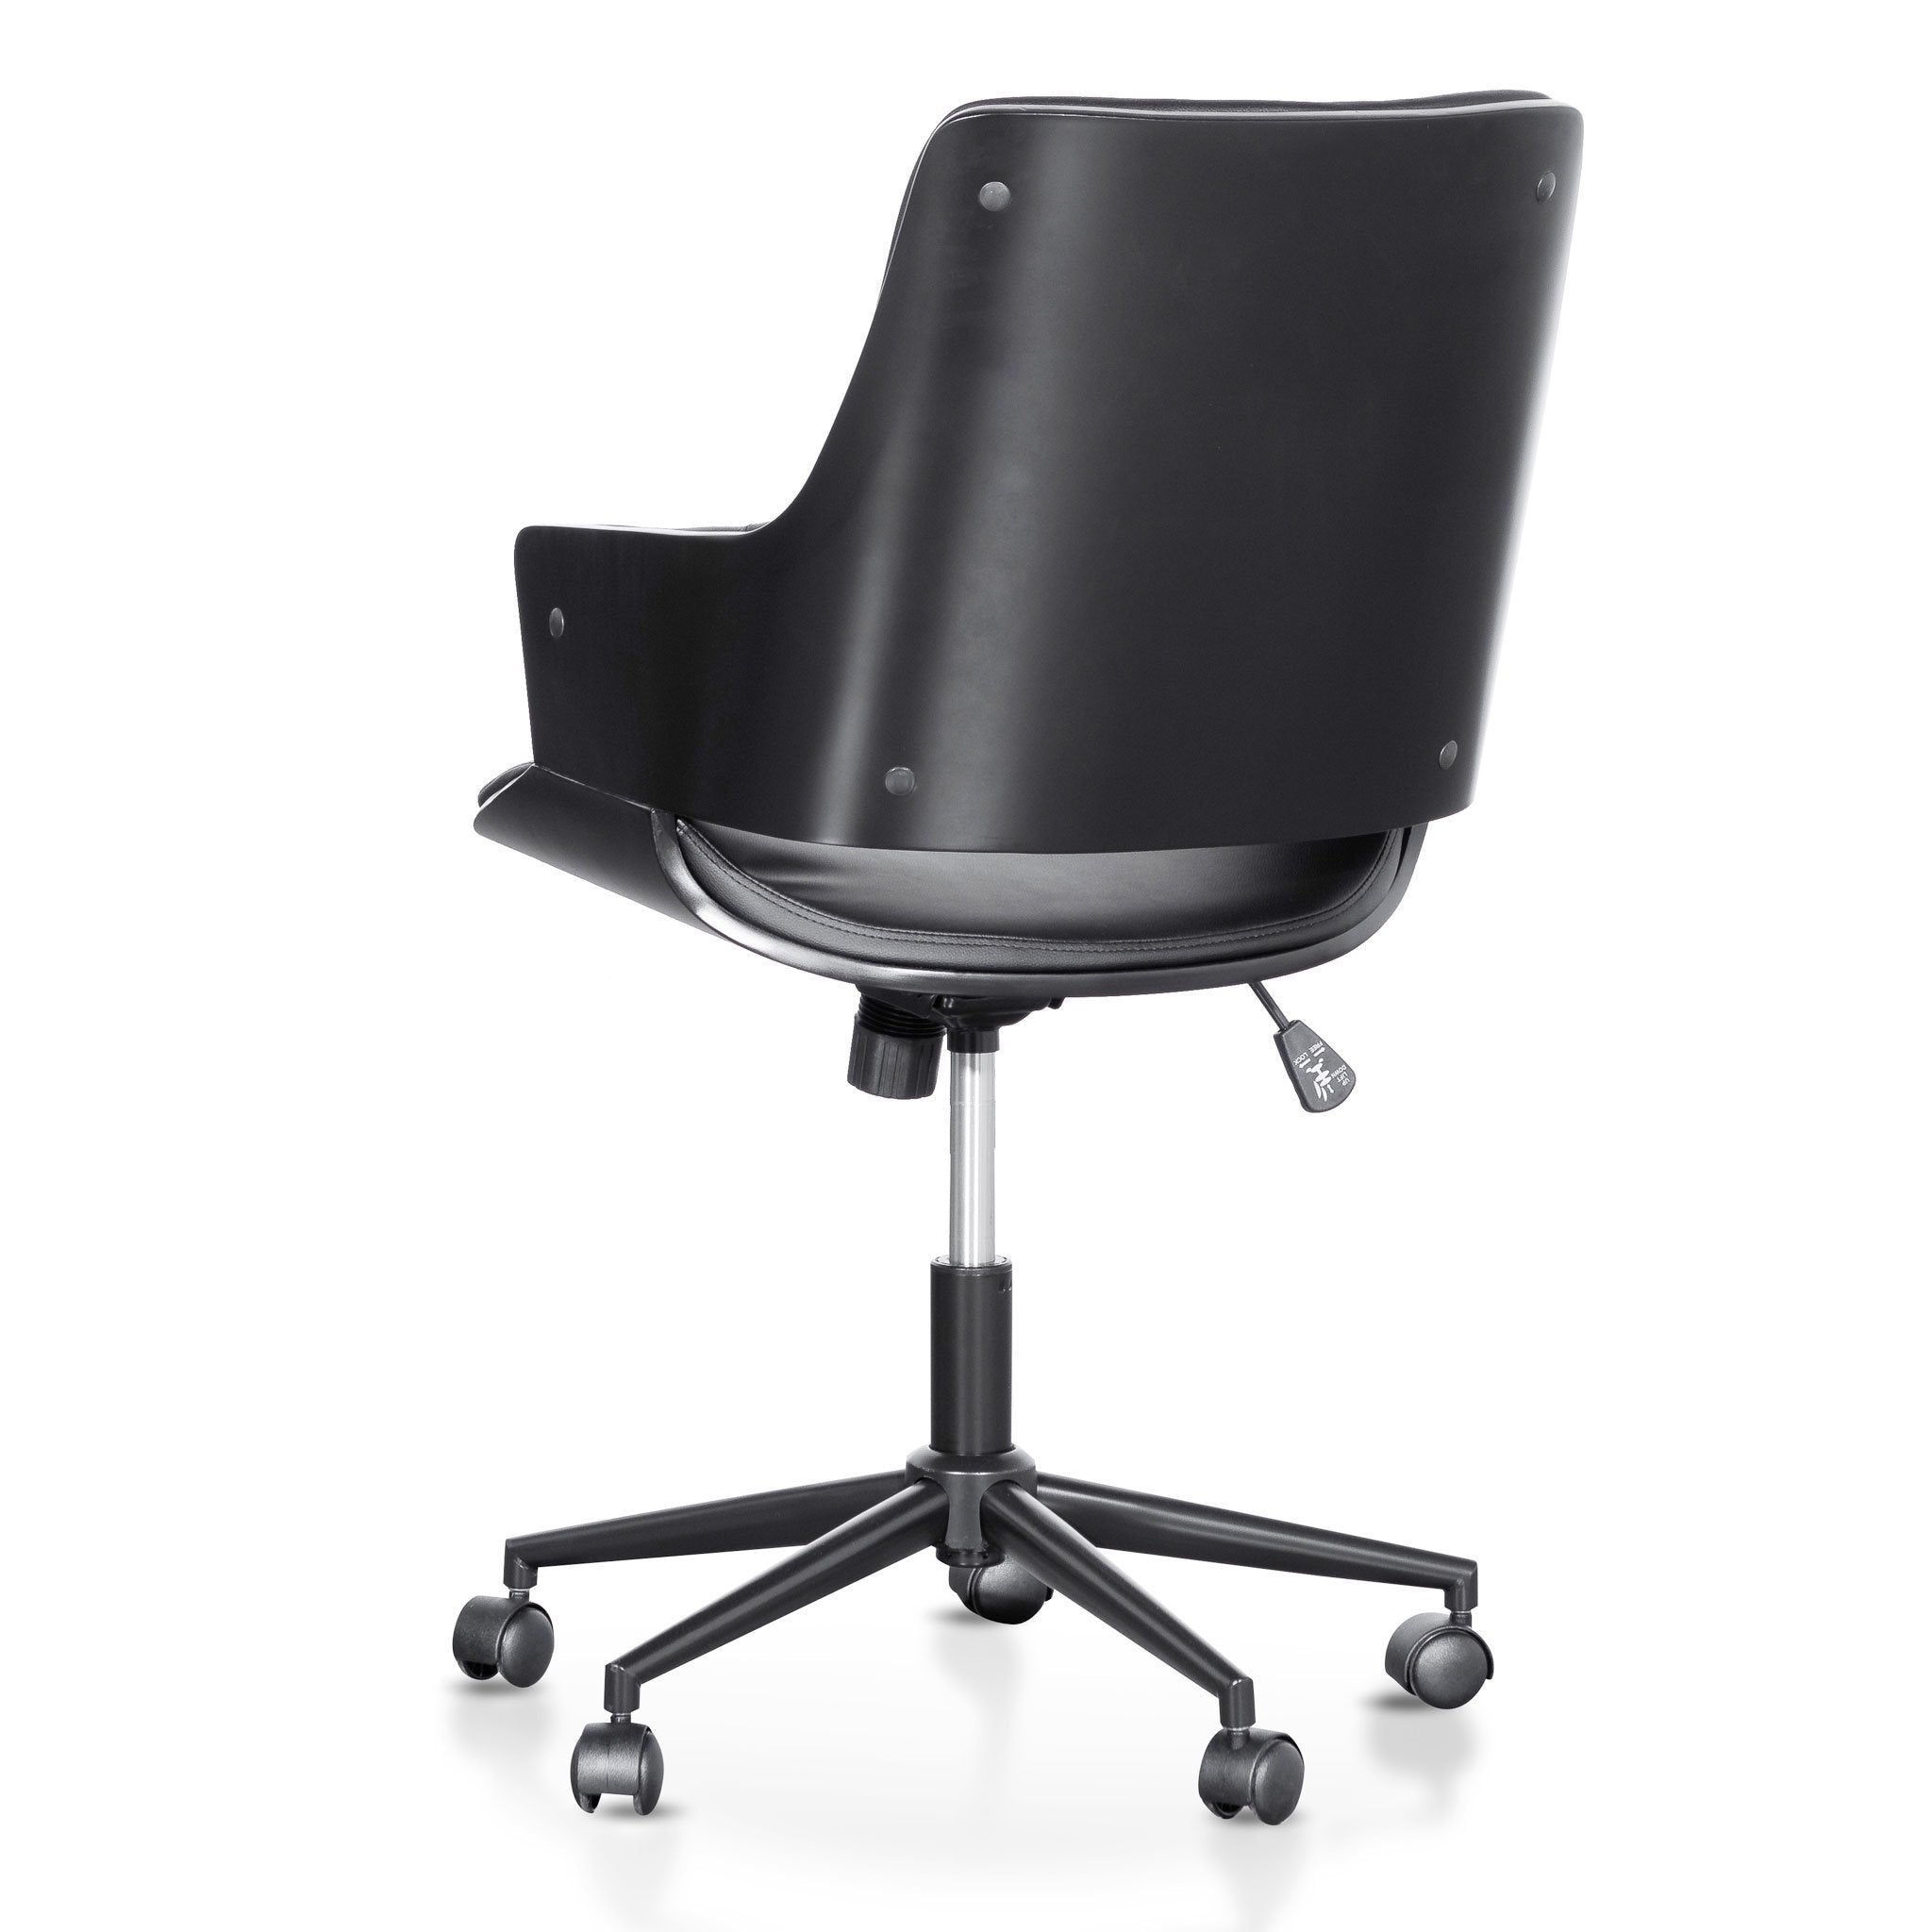 Solis Office Chair - Black OC6213-SE